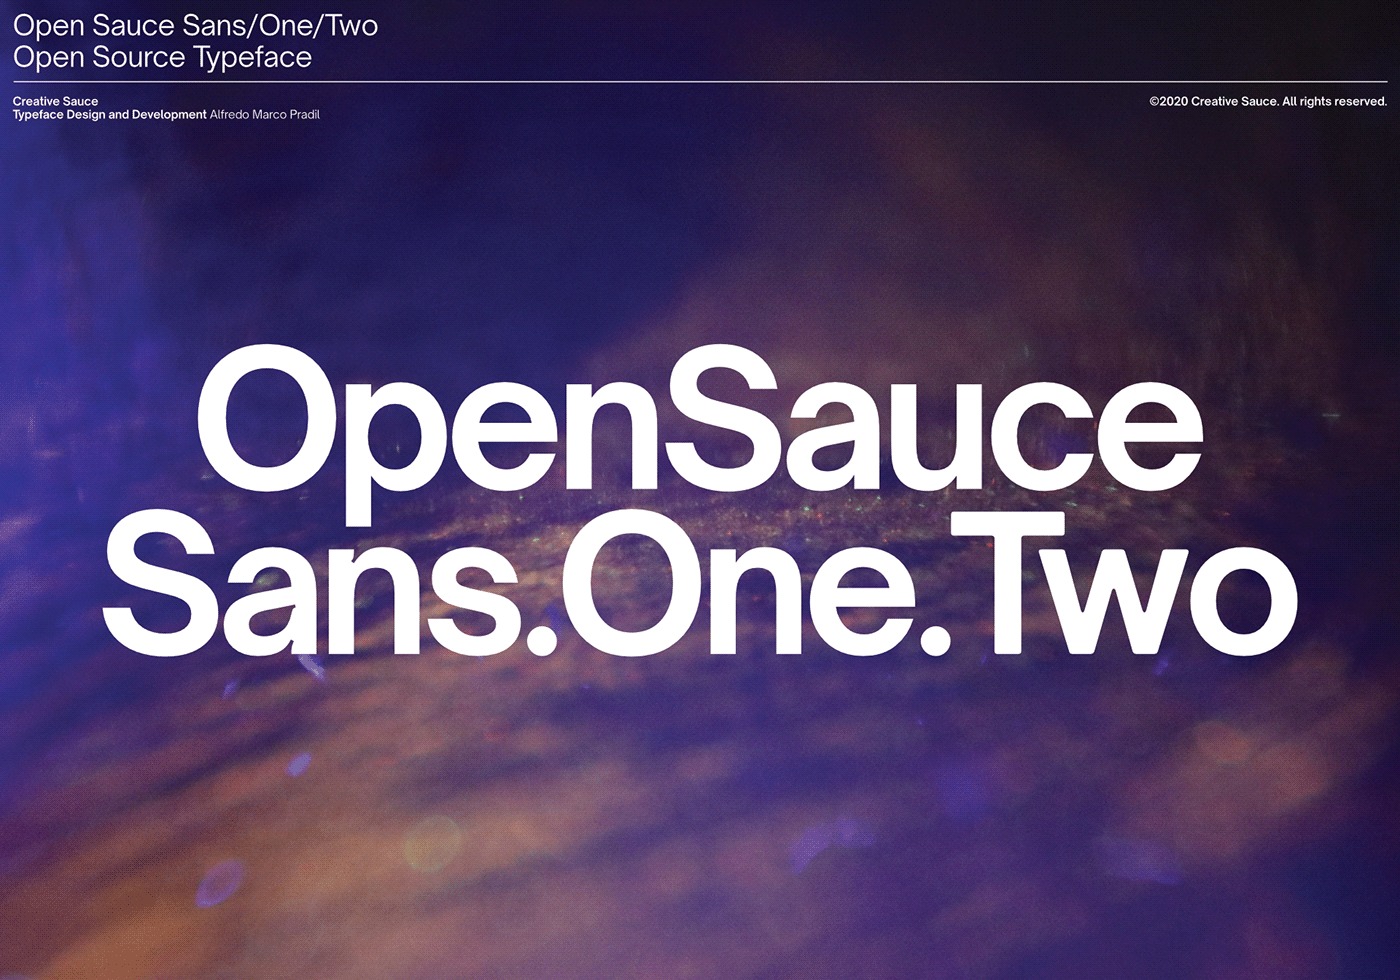 Open Sauce One